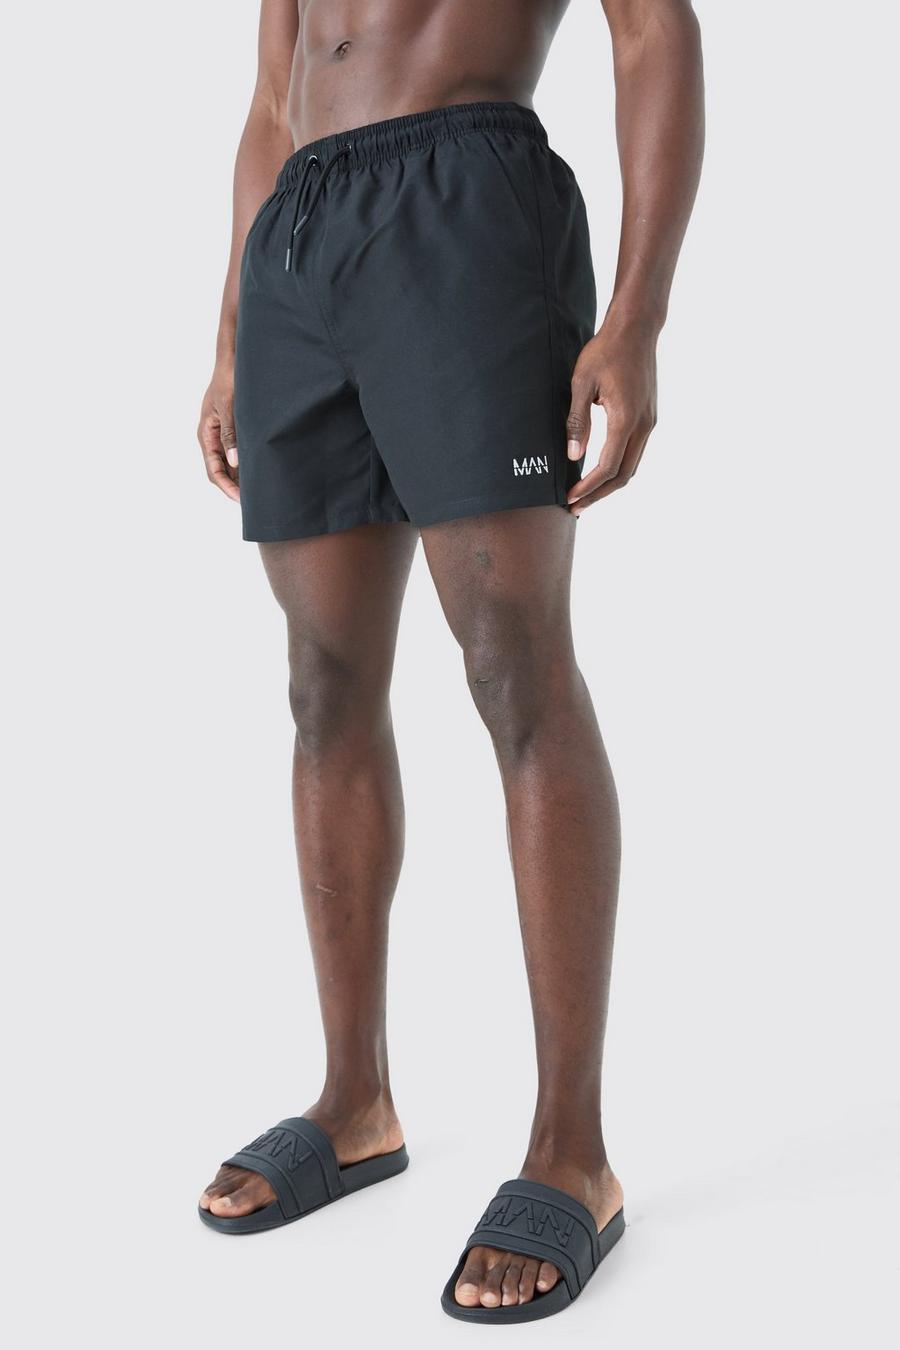 Black Original Man Mid Length Swim Short